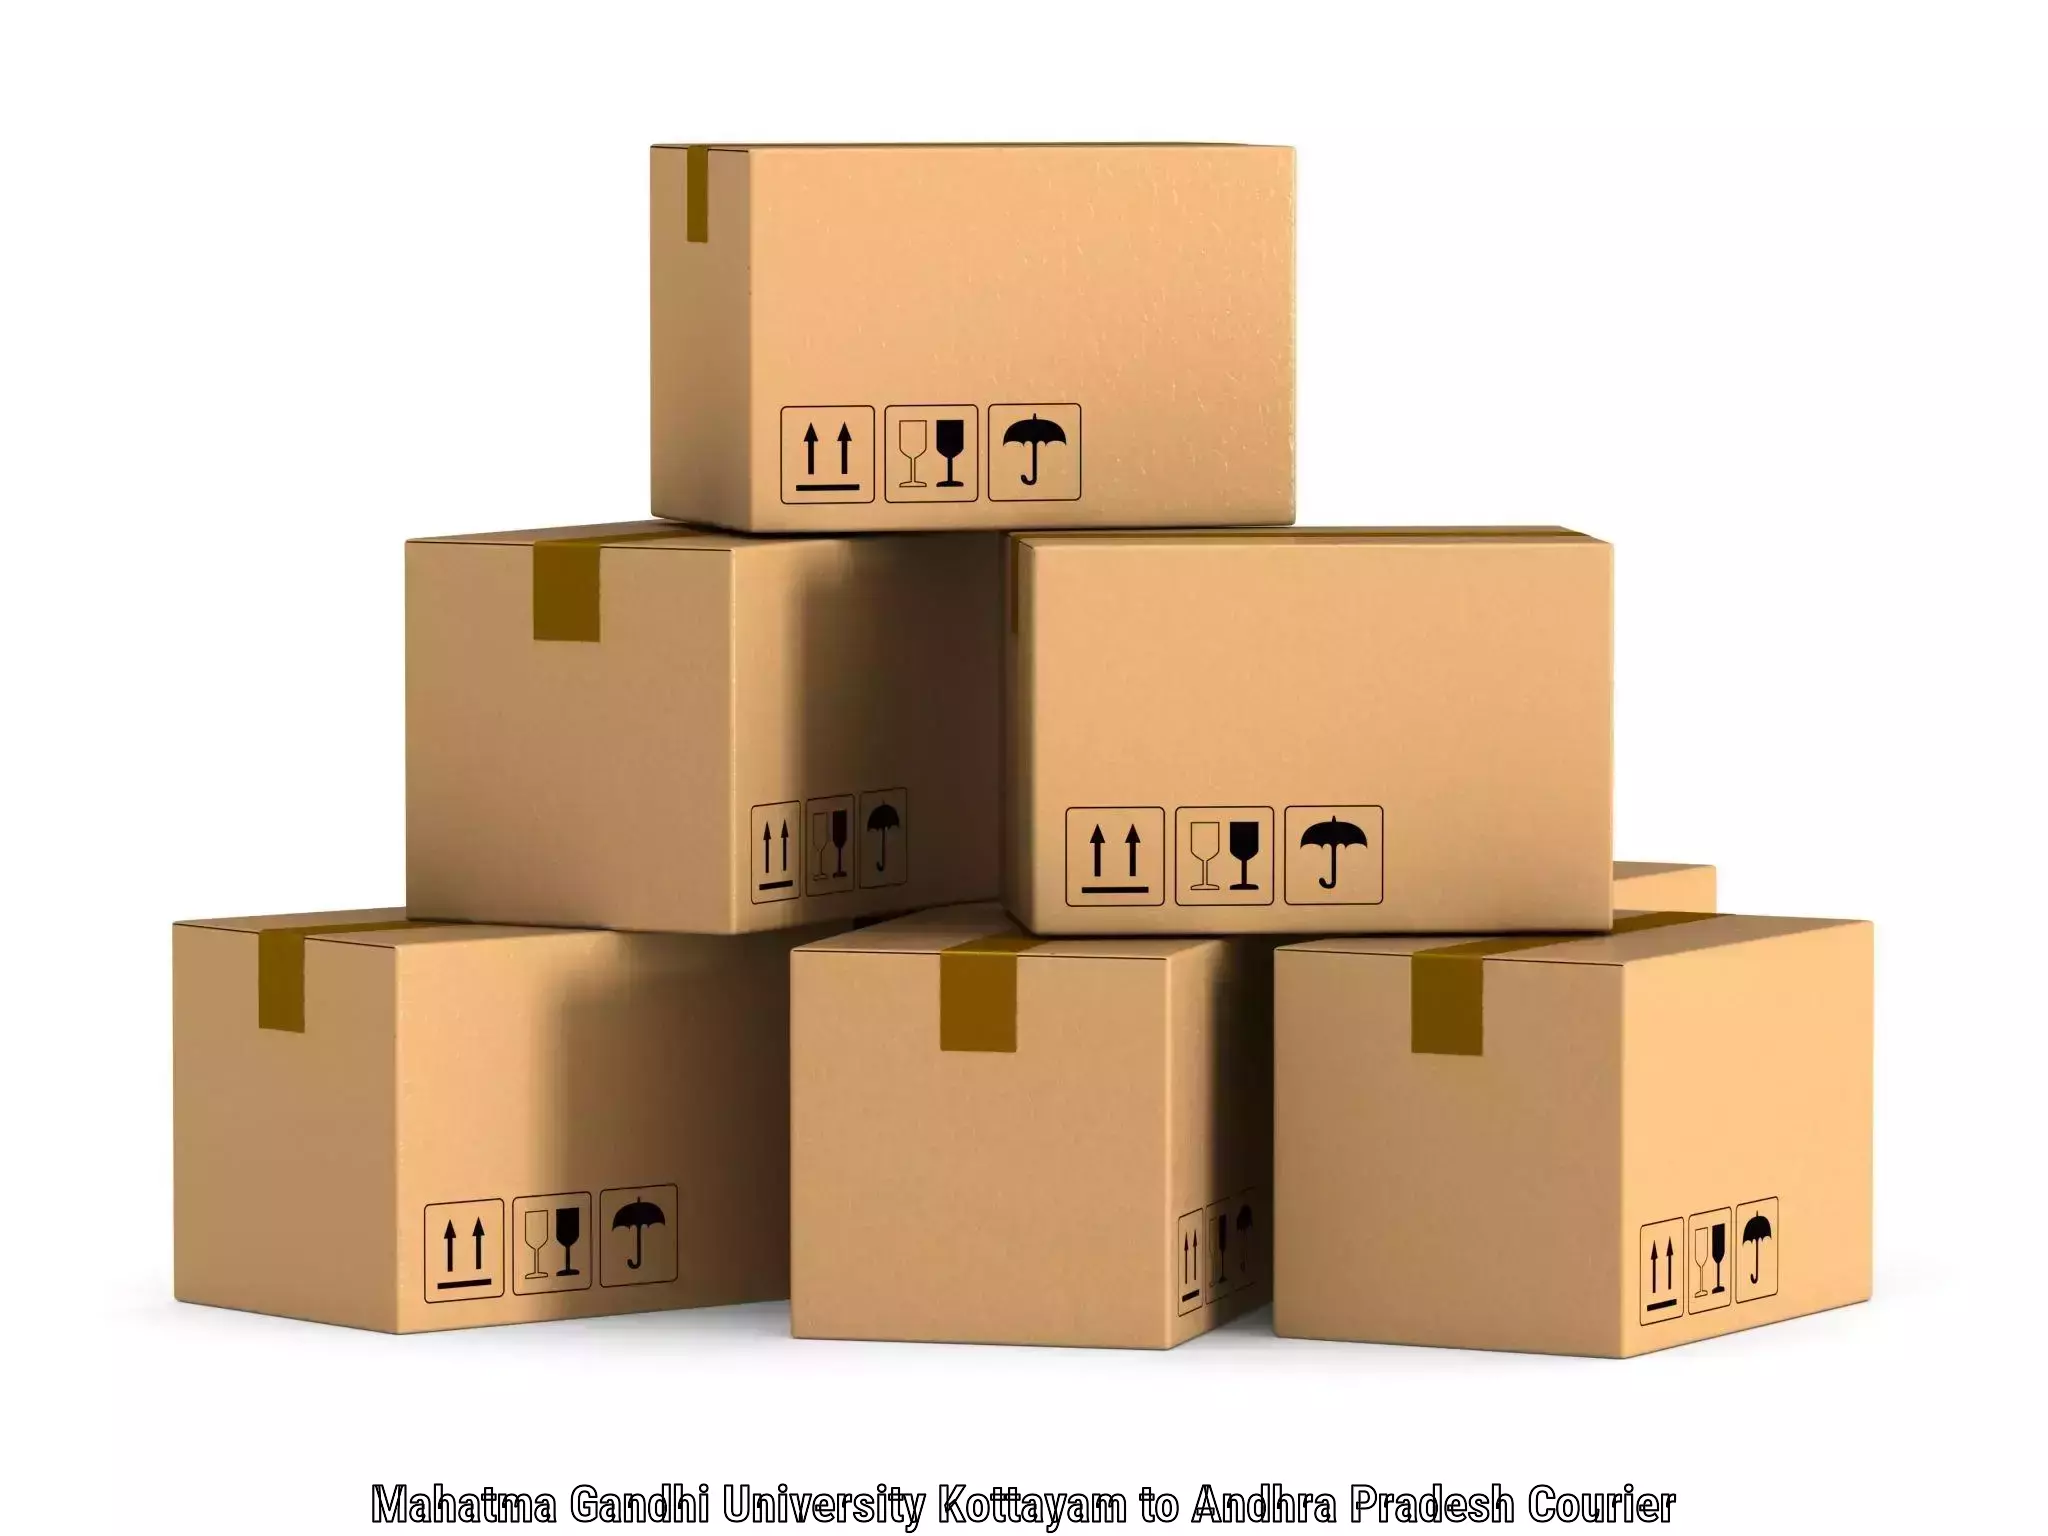 Package delivery network Mahatma Gandhi University Kottayam to Podalakur